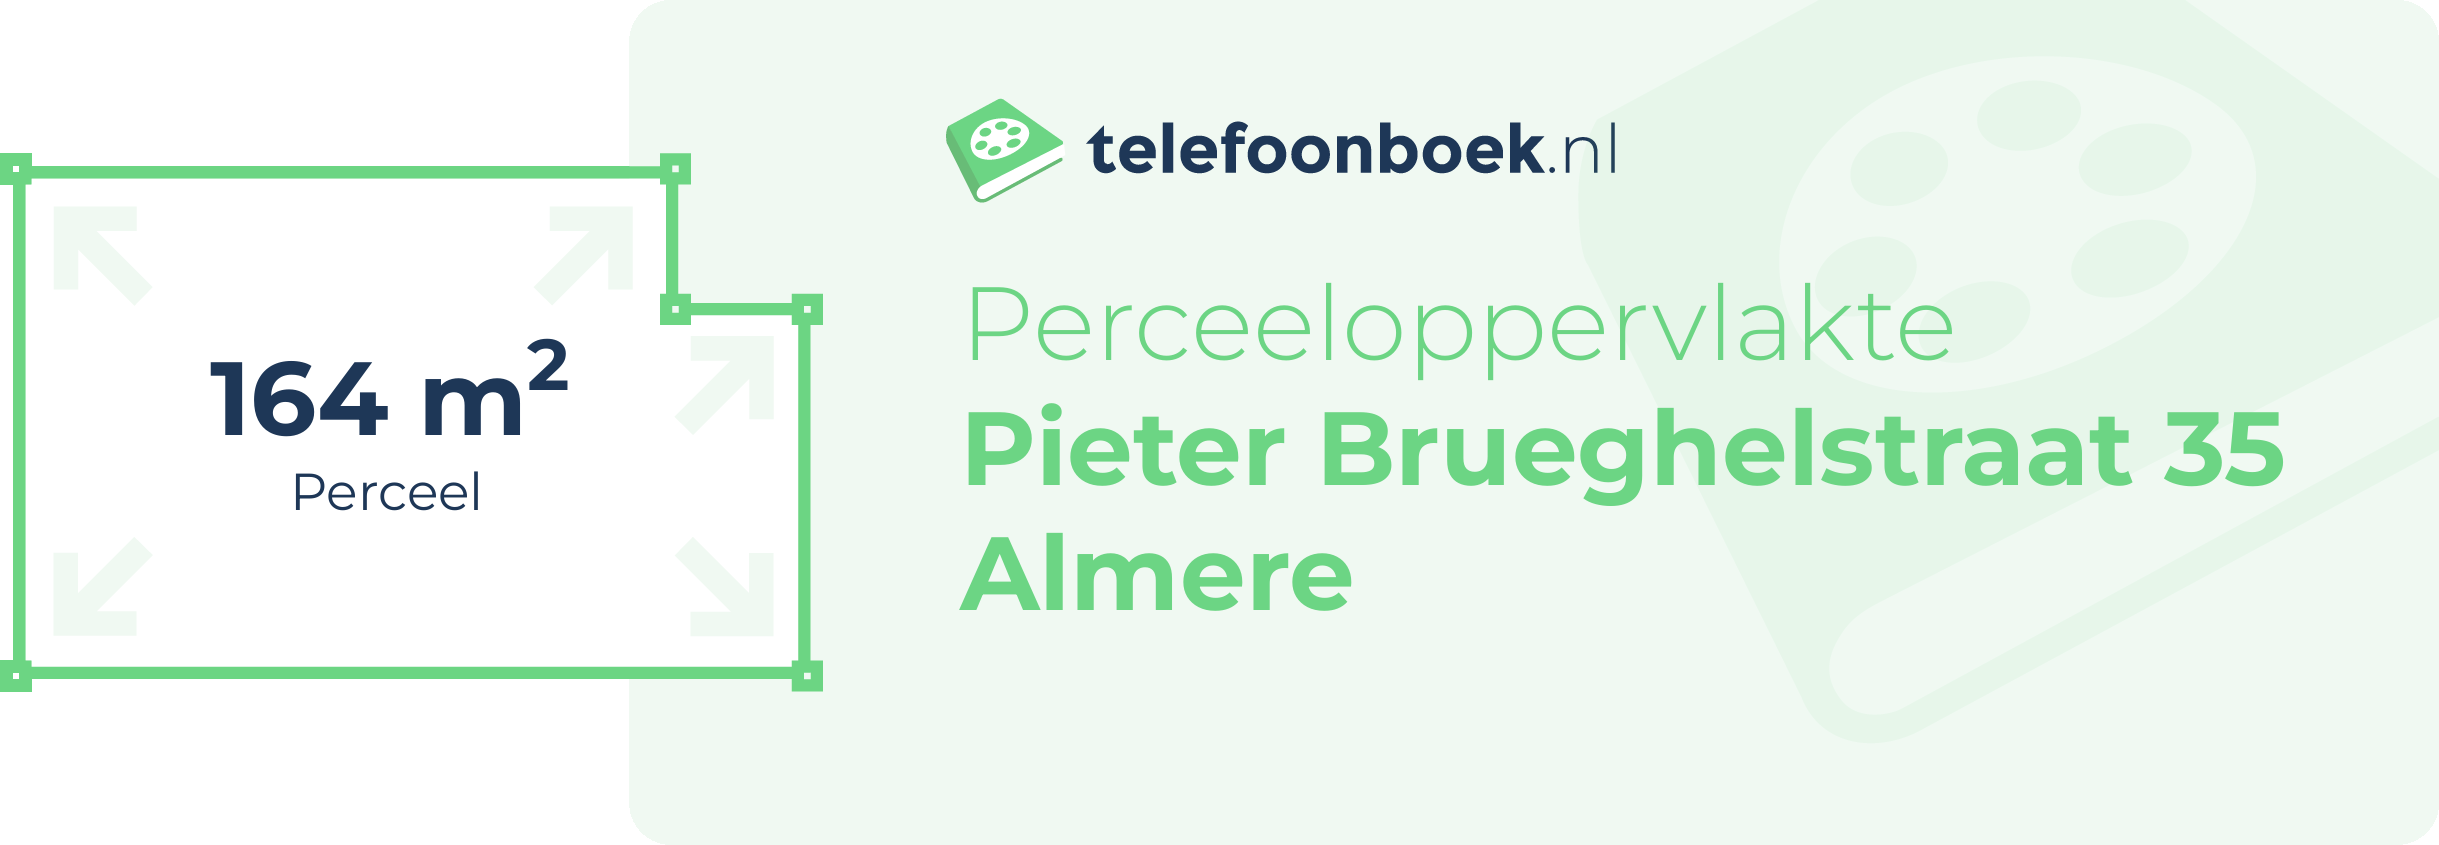 Perceeloppervlakte Pieter Brueghelstraat 35 Almere